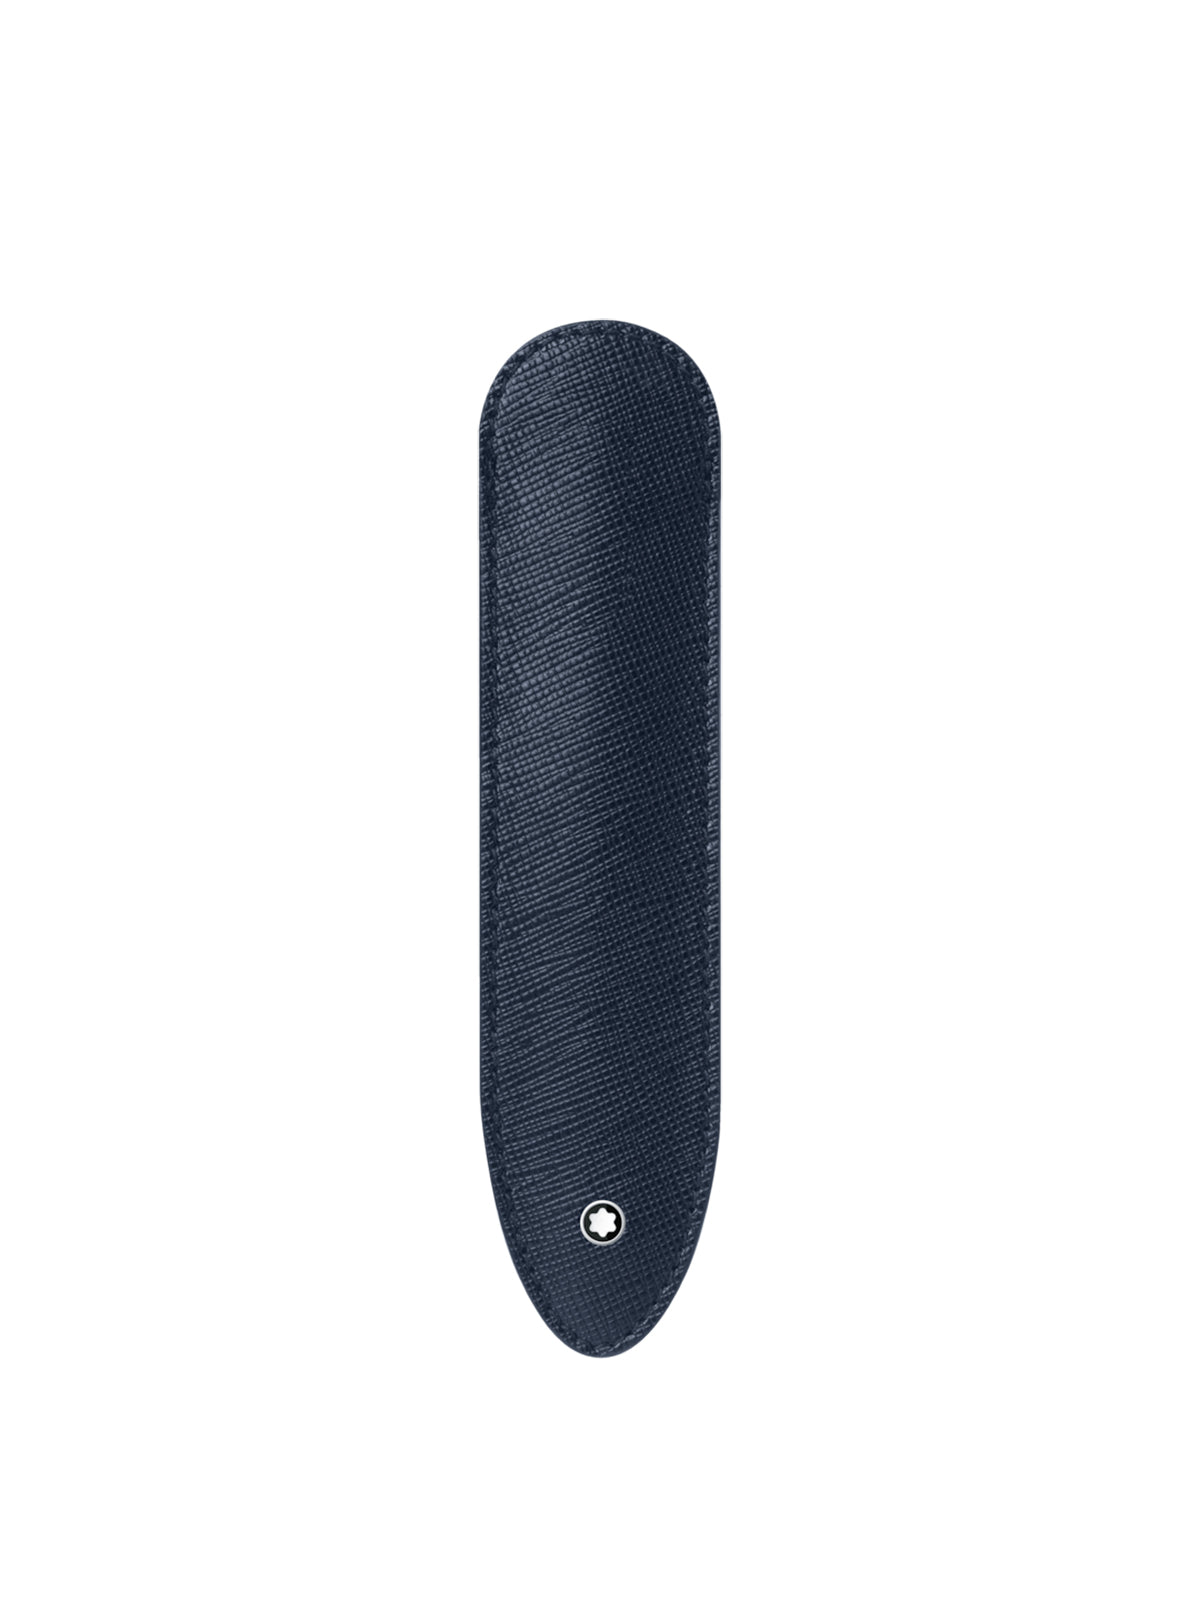 SALE Montblanc Sartorial Navy Leather Pen Sleeve MB128603 *Ex-Display*